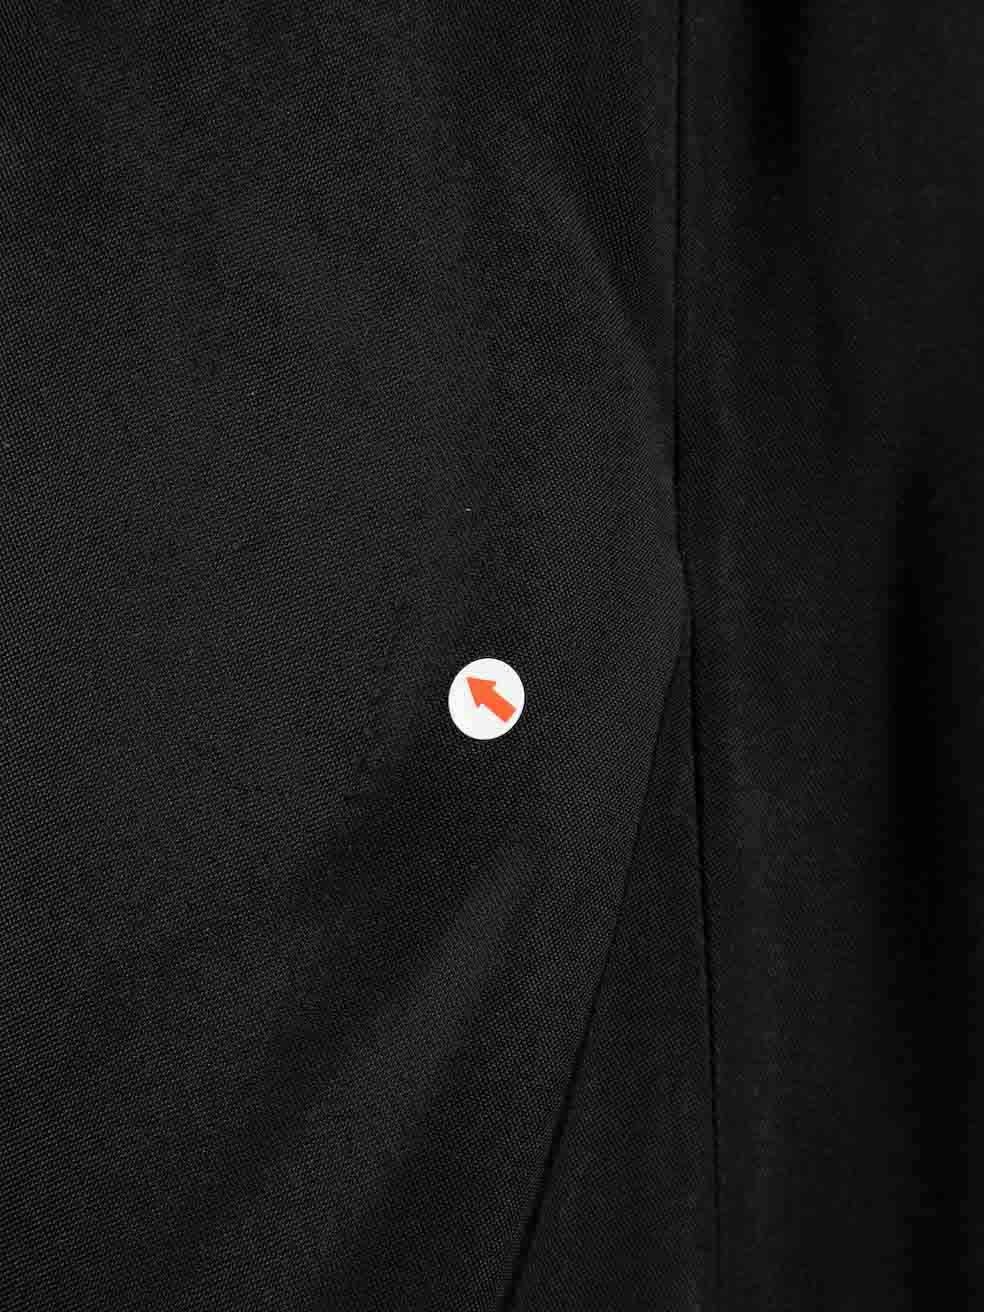 Yohji Yamamoto Black Cap Sleeve Midi Dress Size M For Sale 2